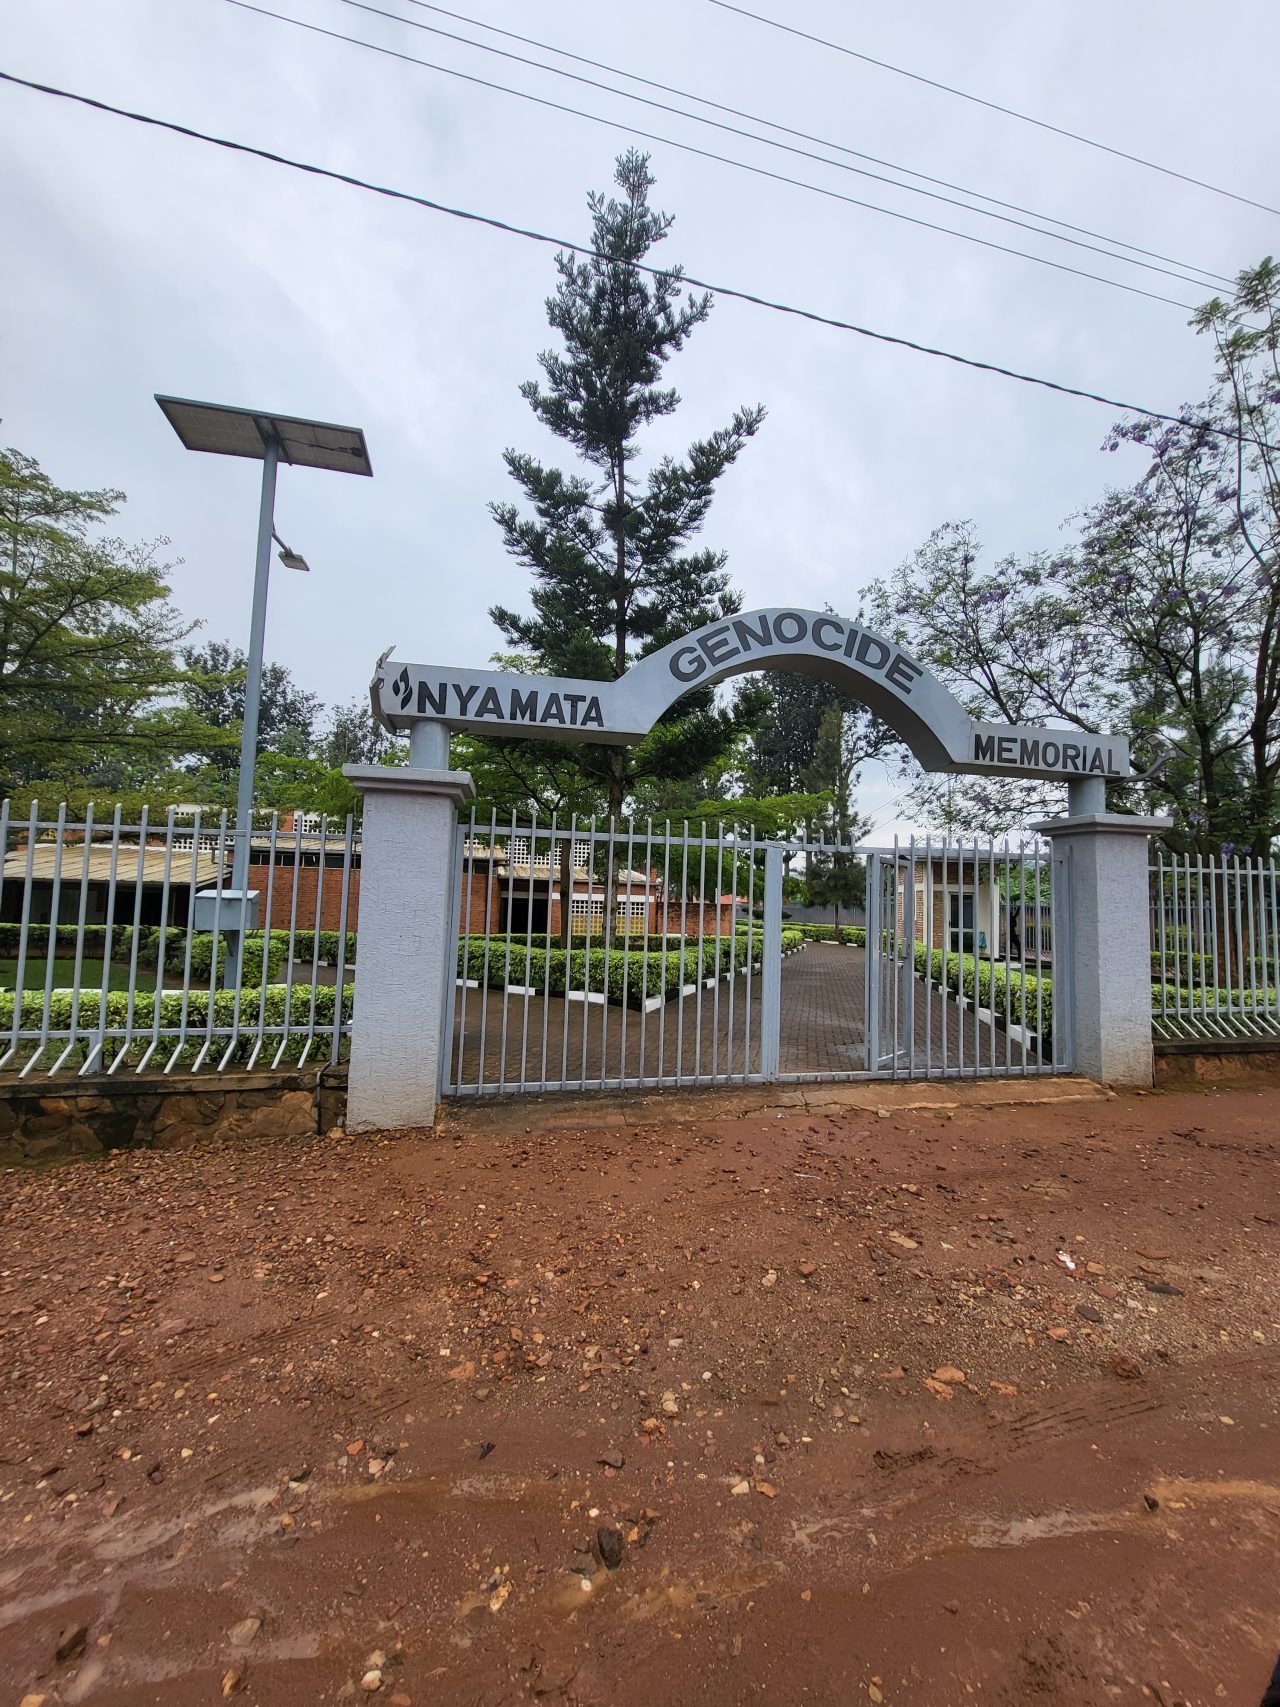 Nyamata Church where people sought refuge